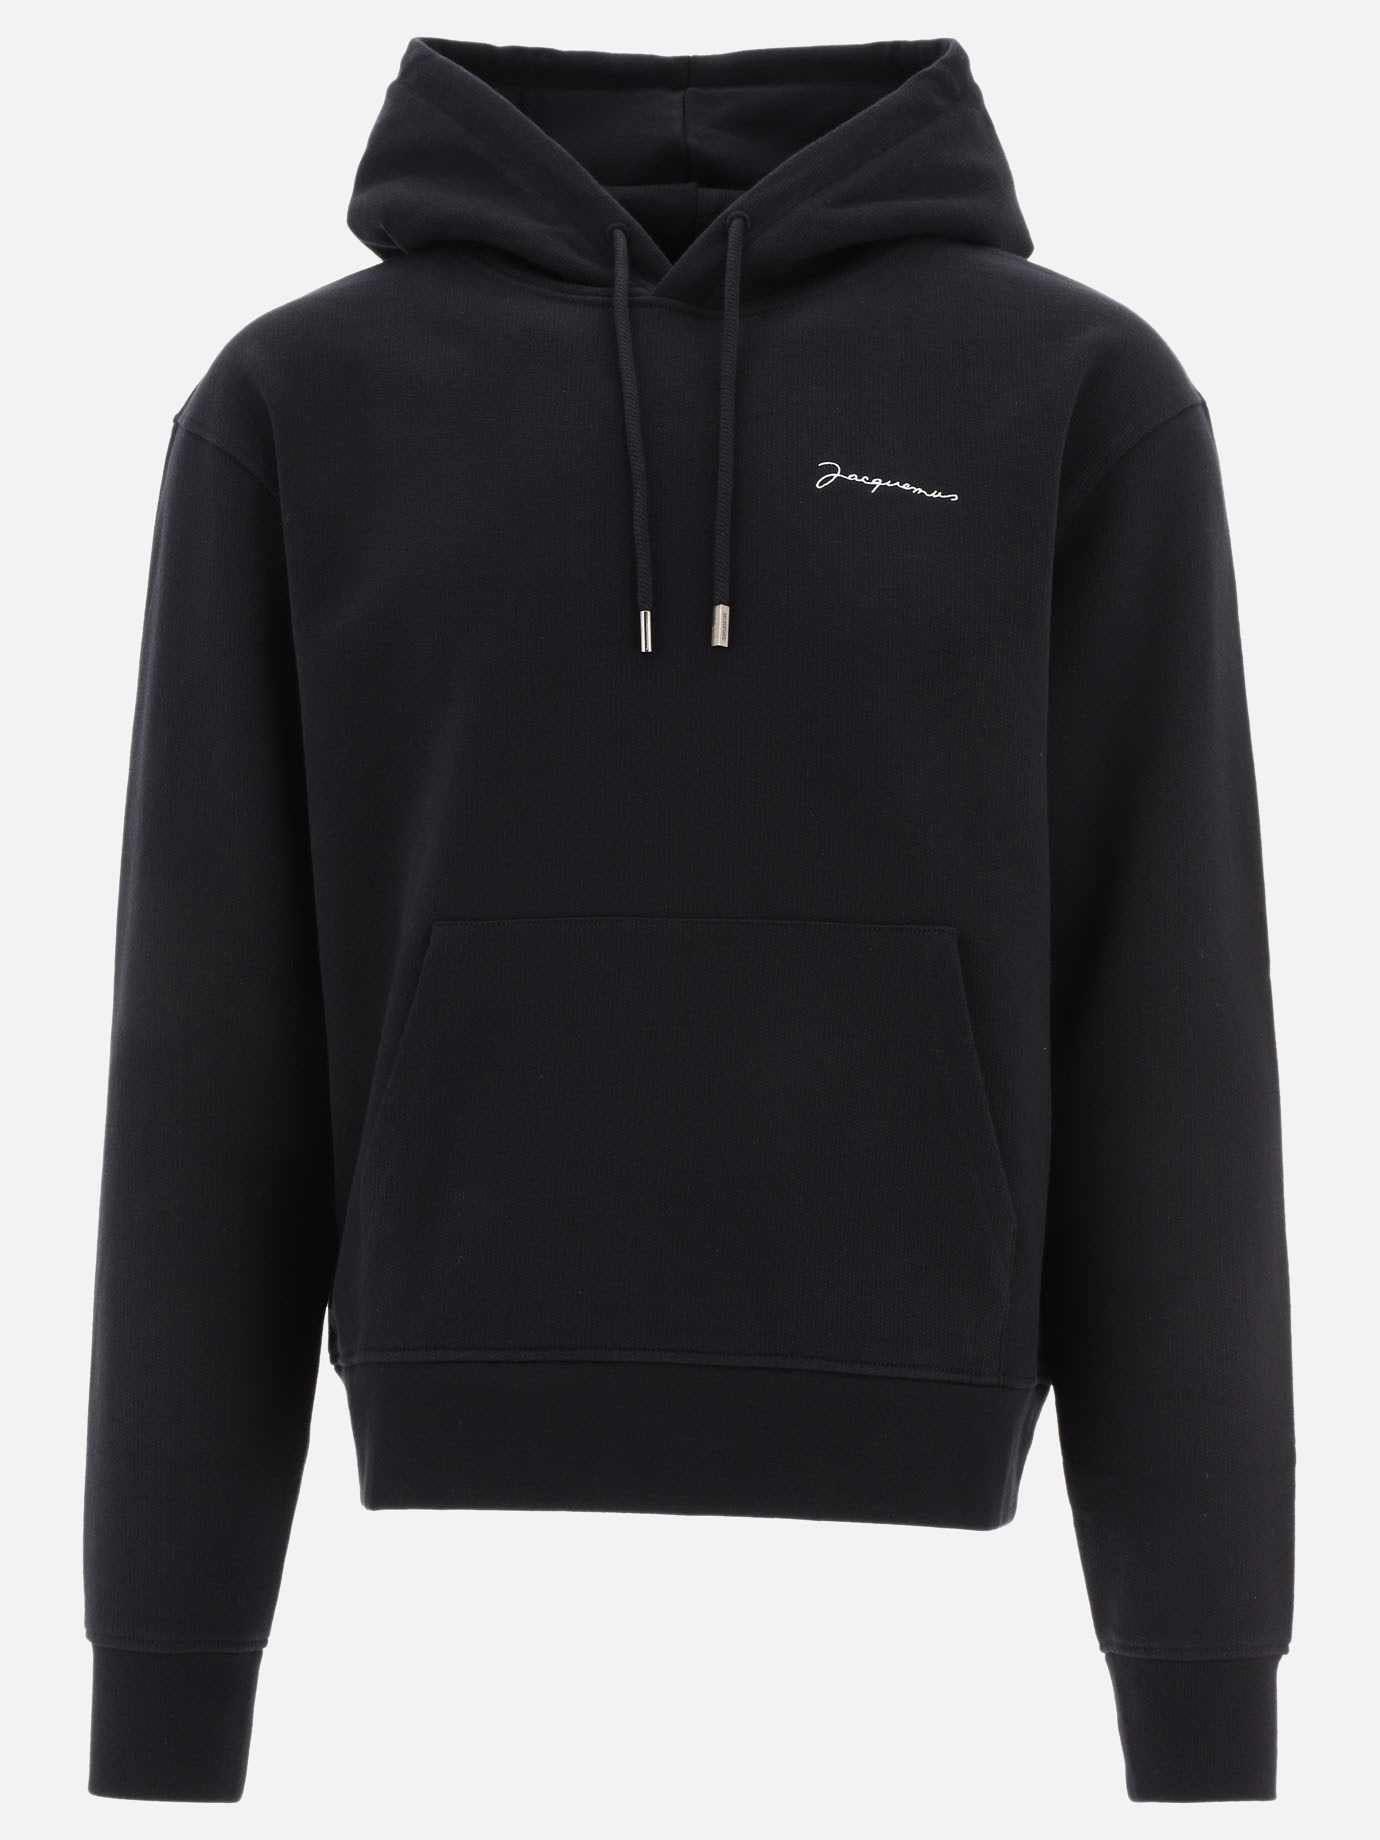  Le Sweatshirt Brodé  hoodieby Jacquemus - 5